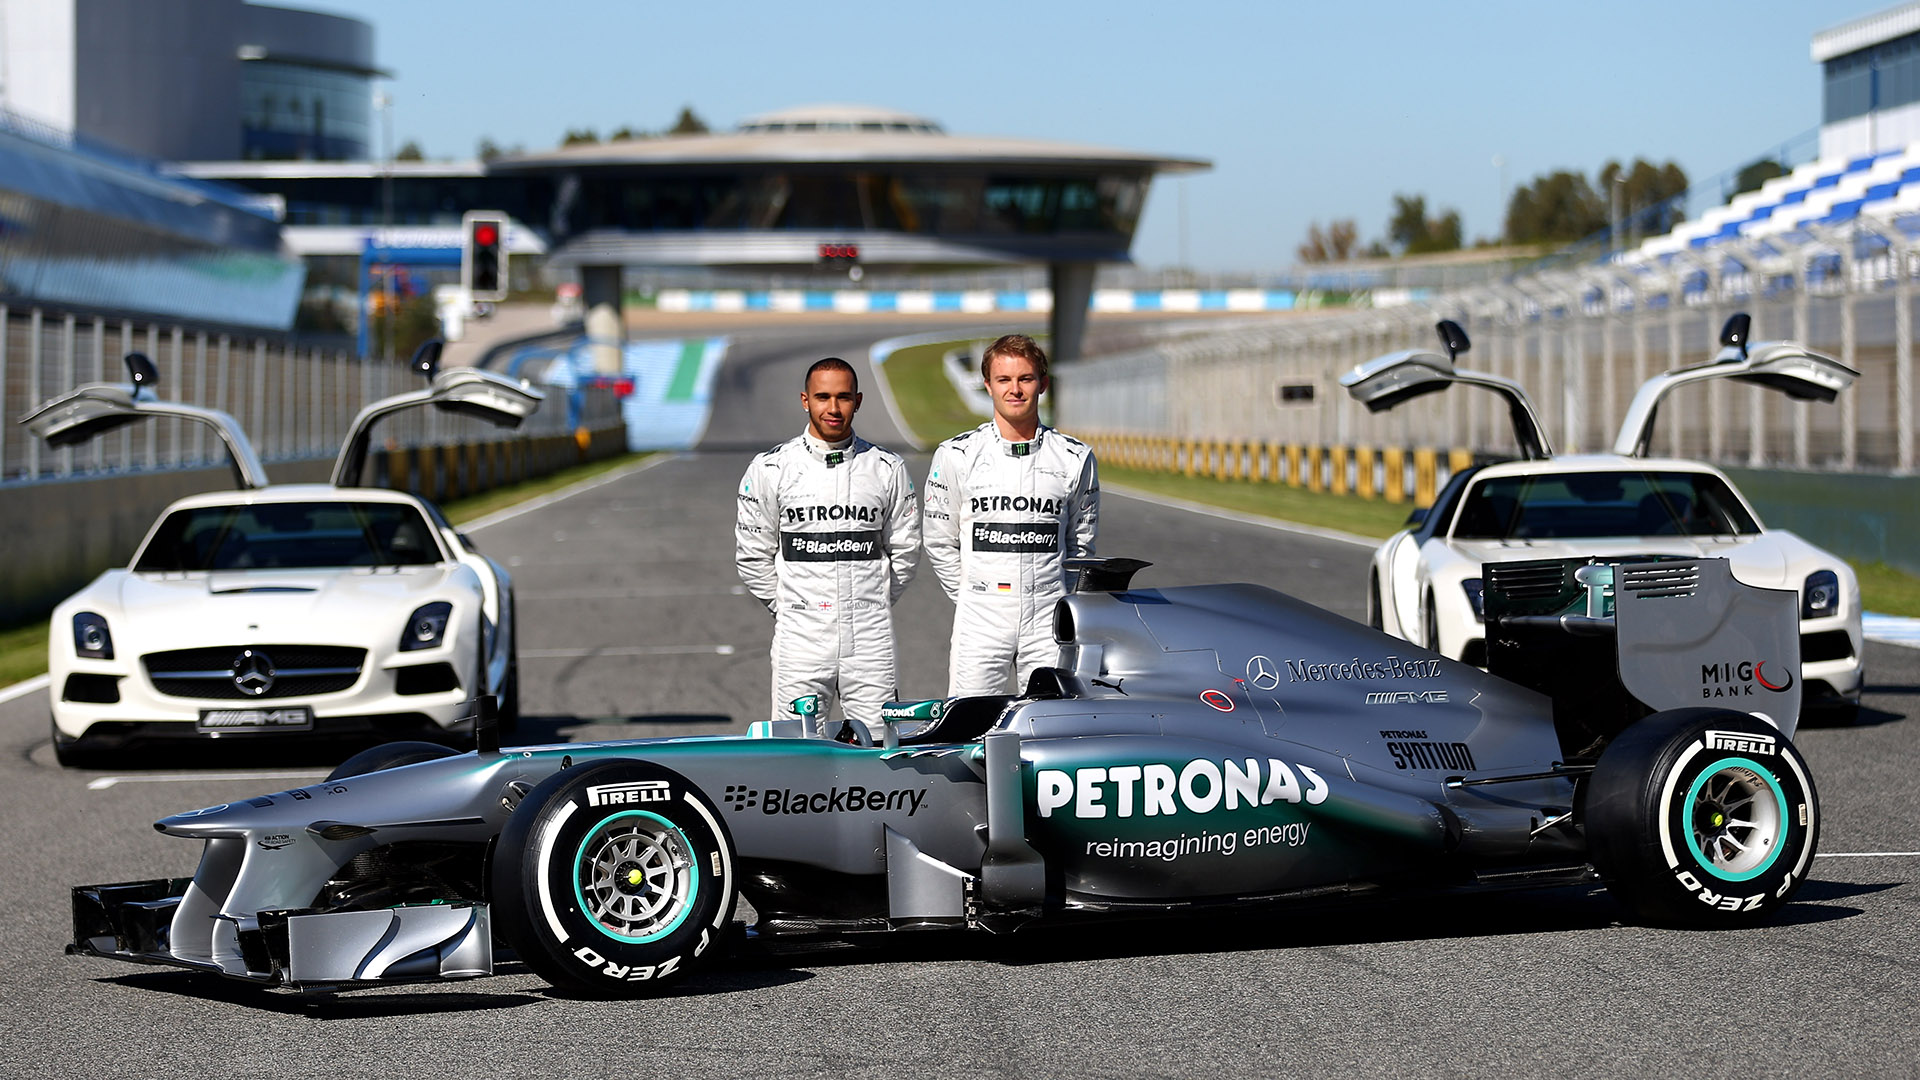 Mercedes W04 Formula Car Showcased At Jerez